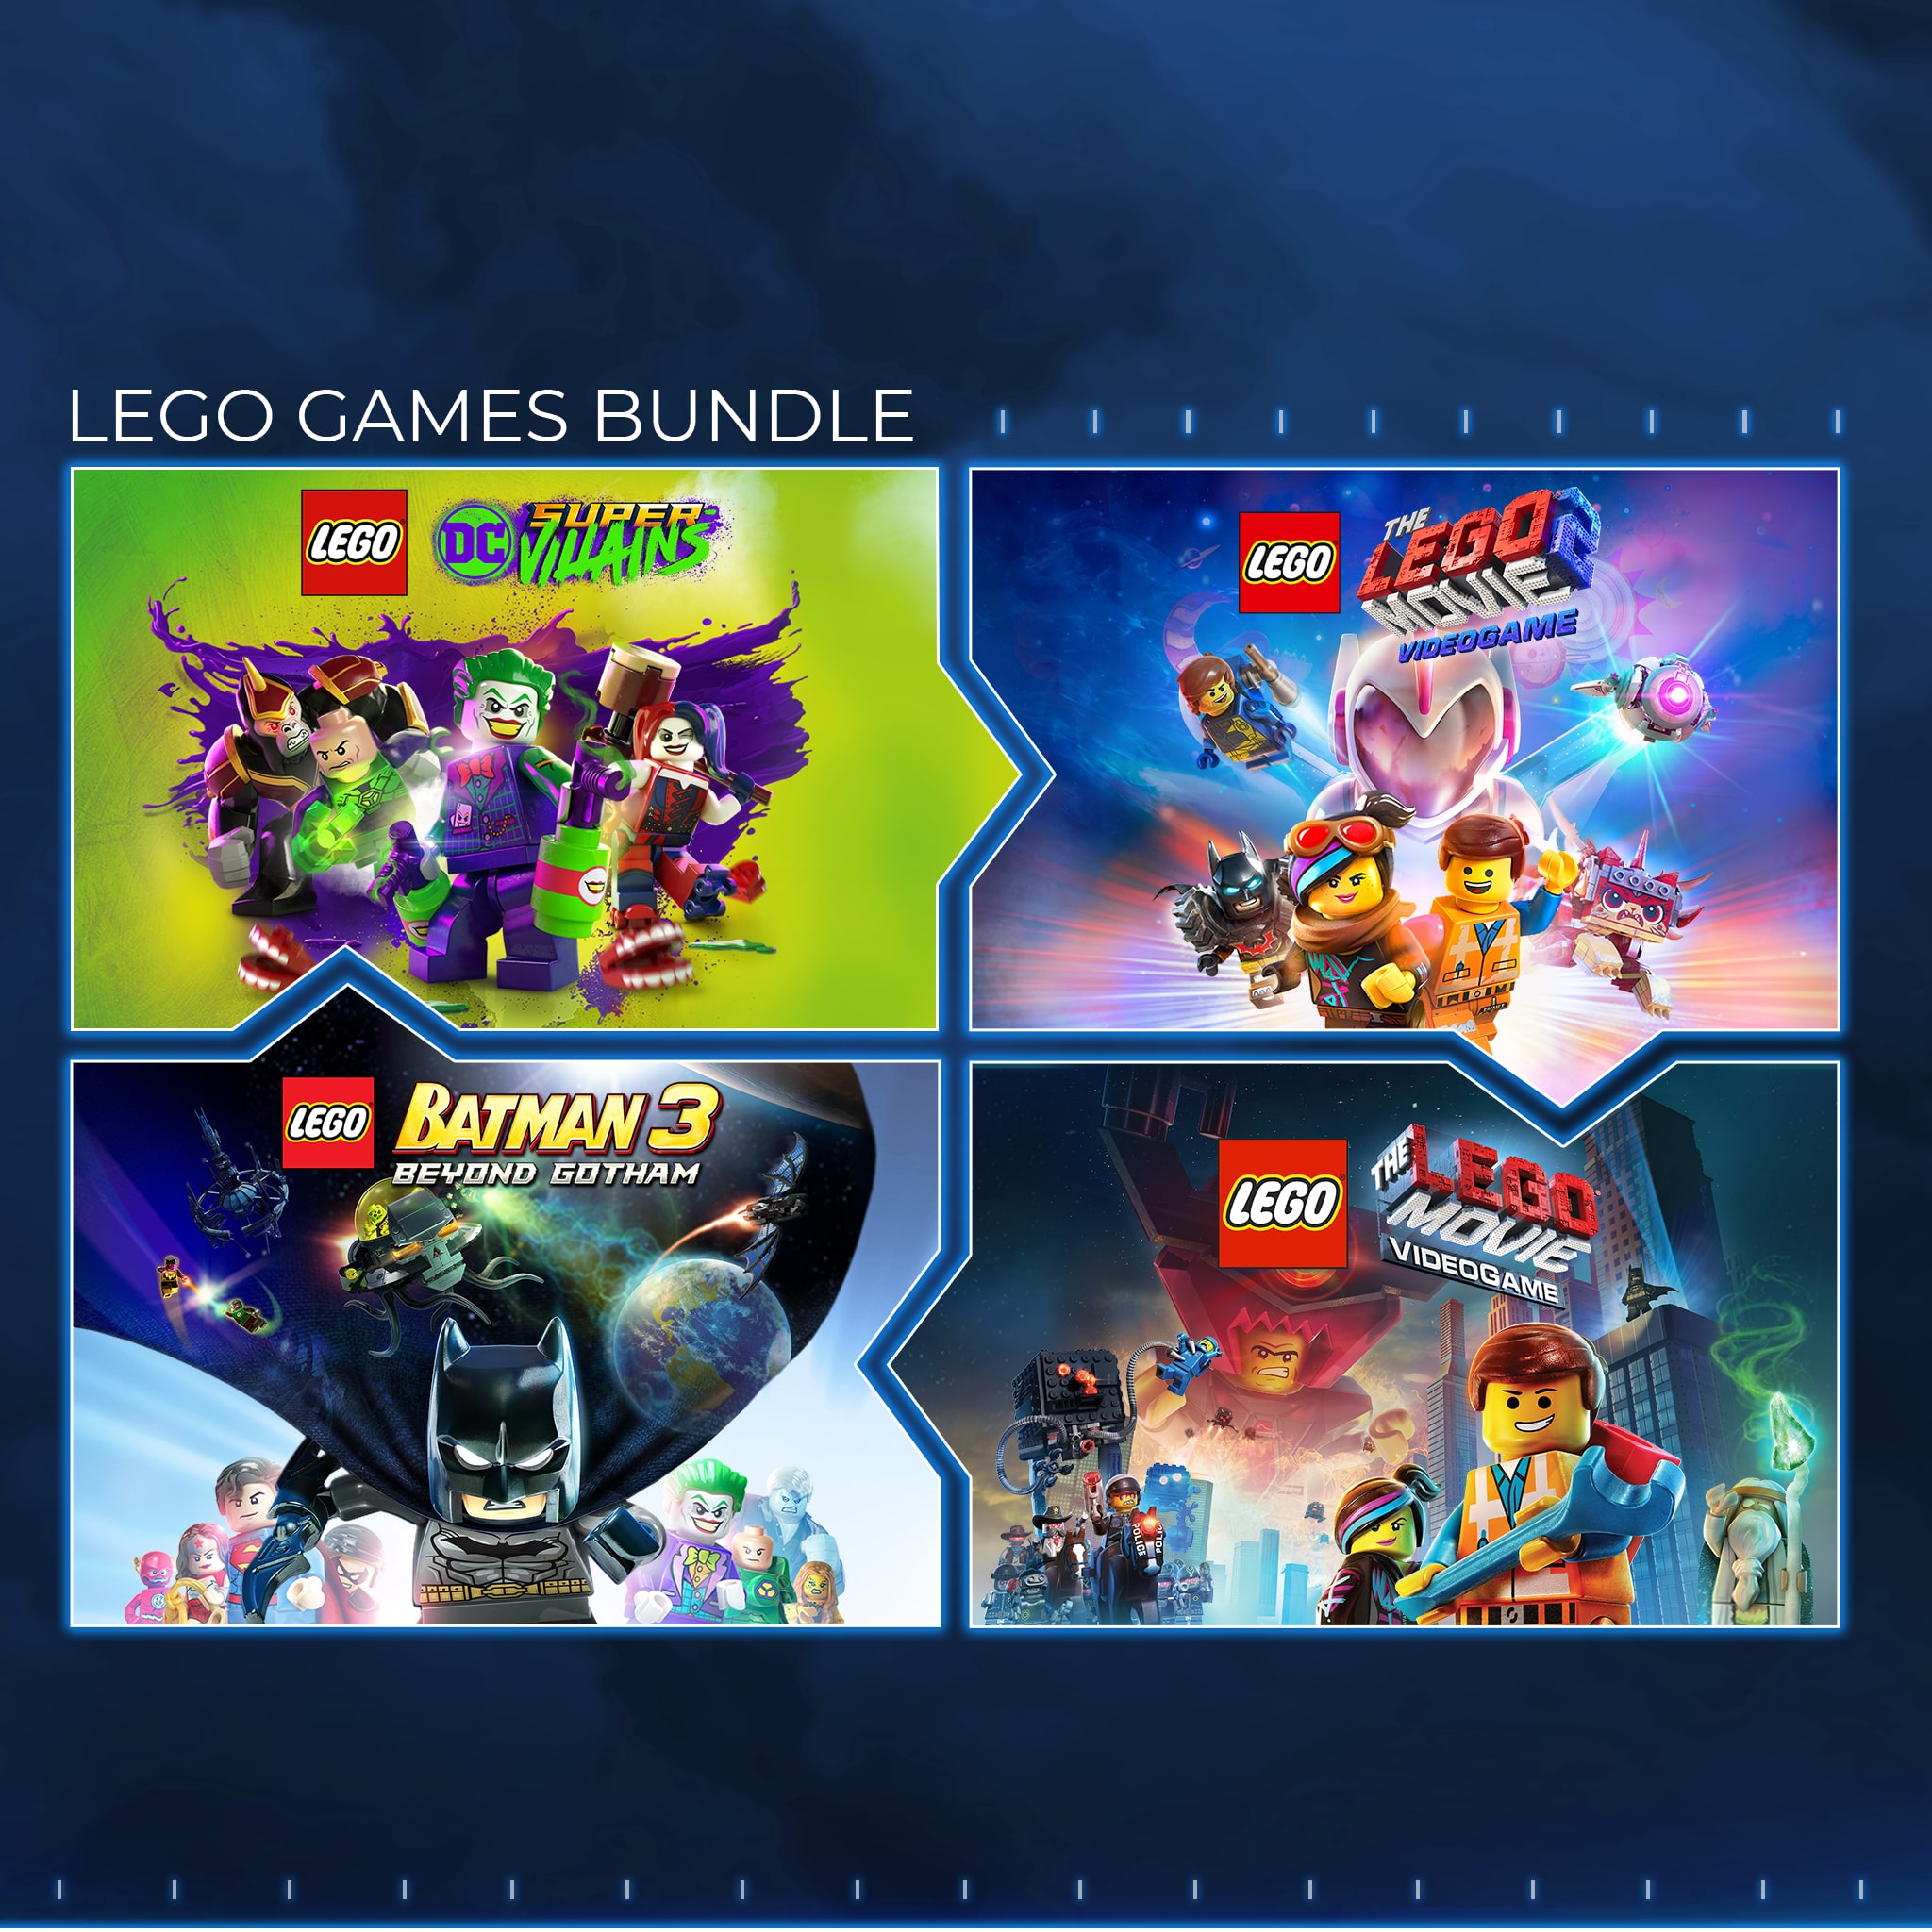 Xbox Digital Games: 4-Game The Lego Games Bundle $10, Lego Jurassic World, The Lego Ninjago Movie Video Game Each $5 & More (Xbox One,Series X|S)